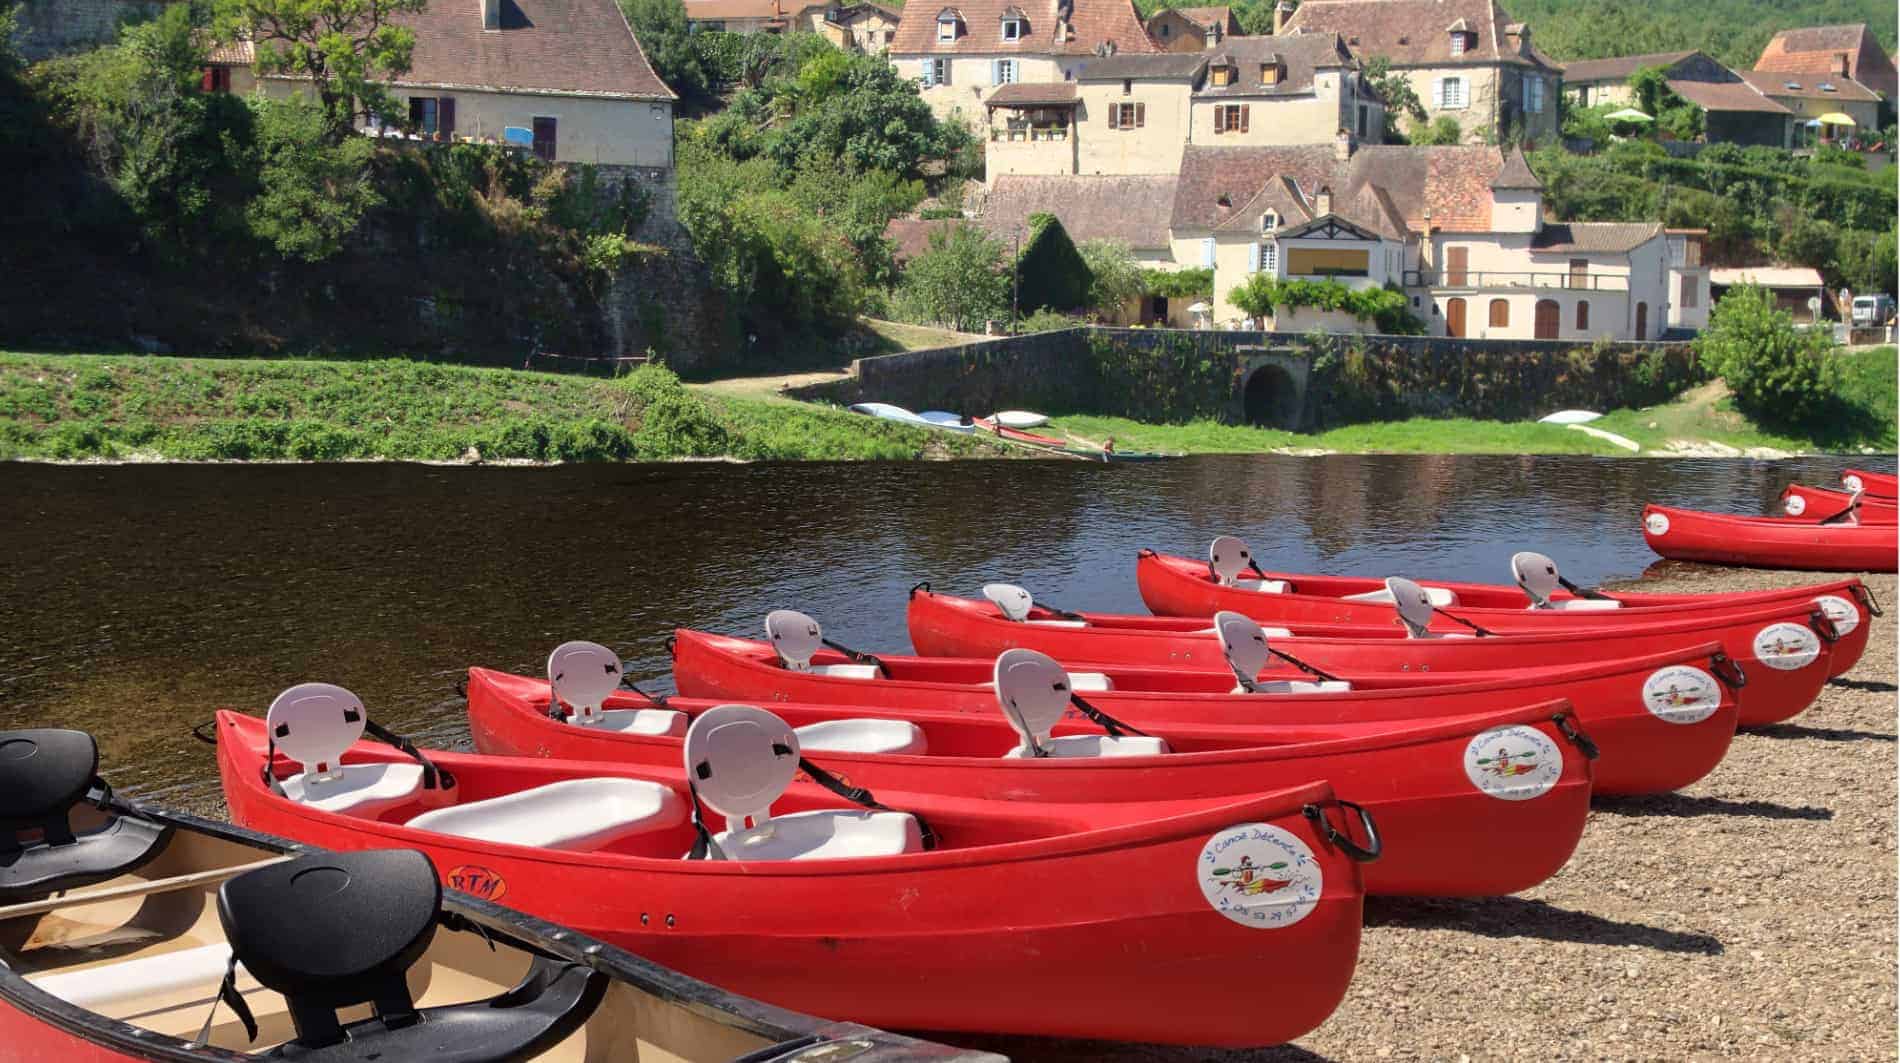 Location Canoe Dordogne / Castelnaud / Beynac / Les Milandes